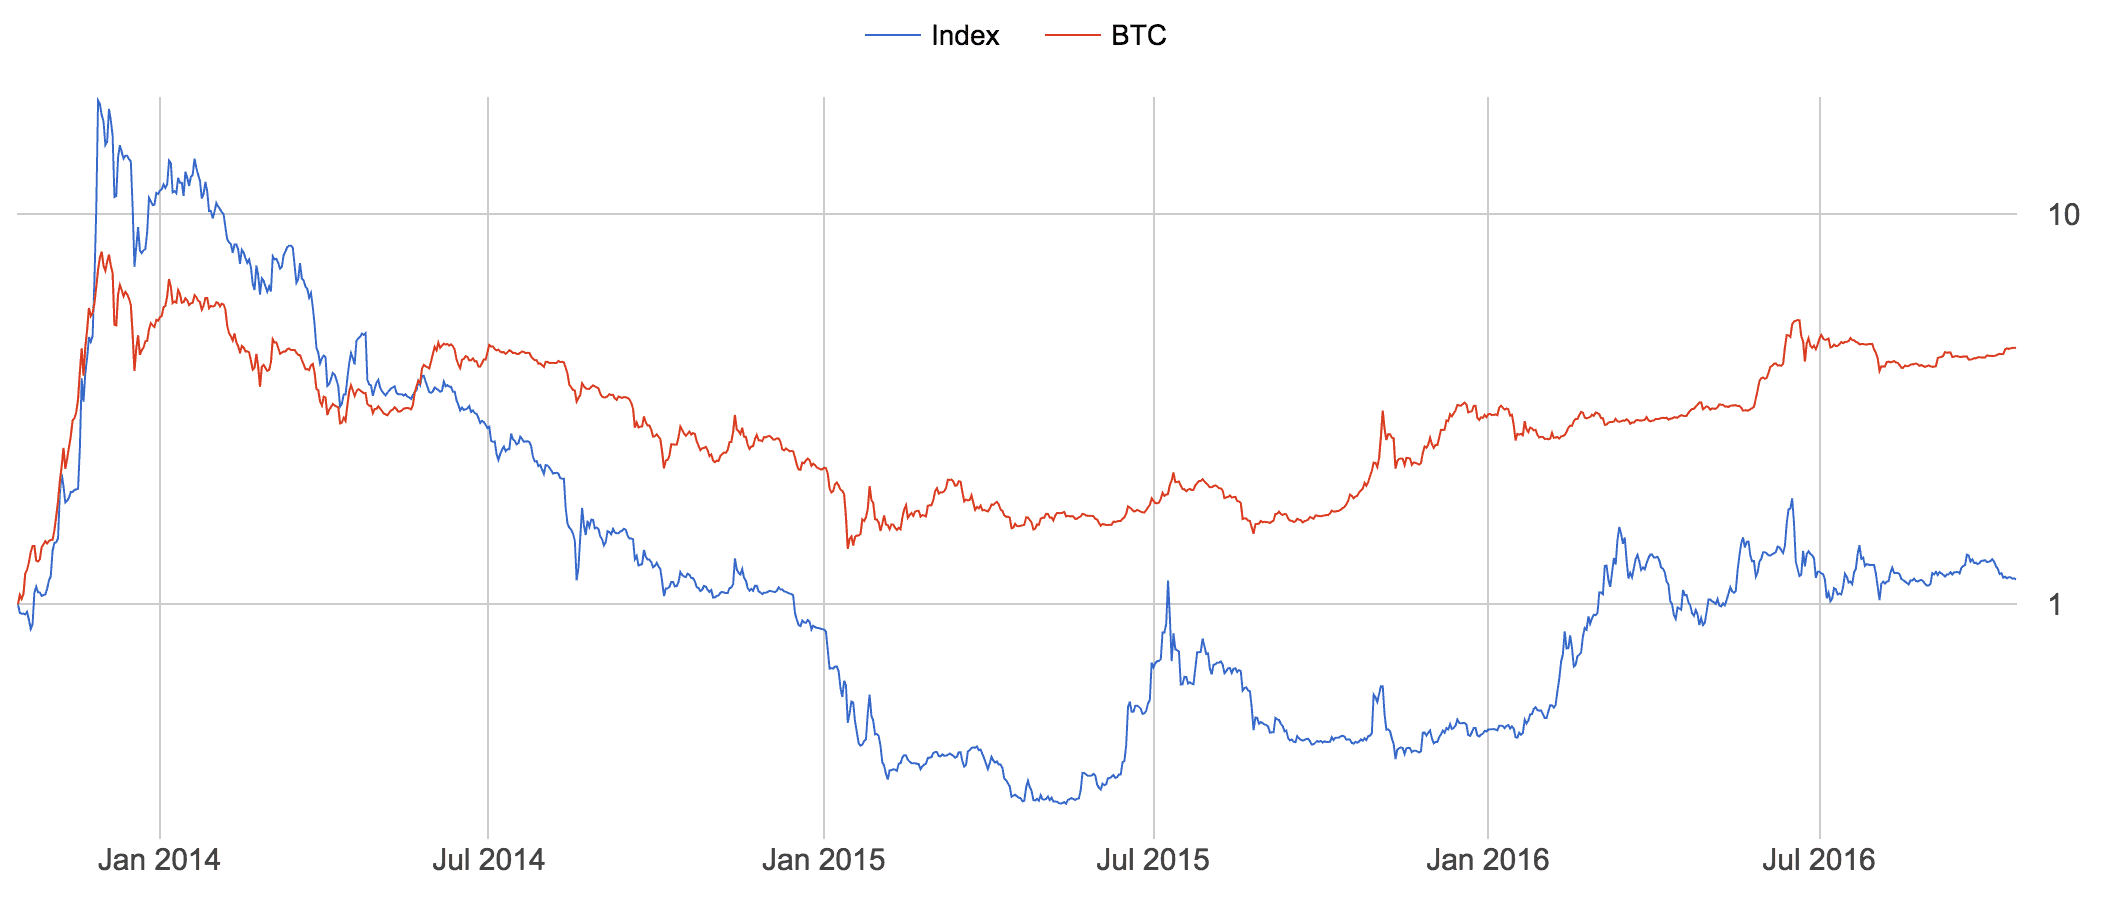 Bitcoin vs Index Portfolio of top 10 altcoins. Bitcoin 4.6x vs Index 1.2x